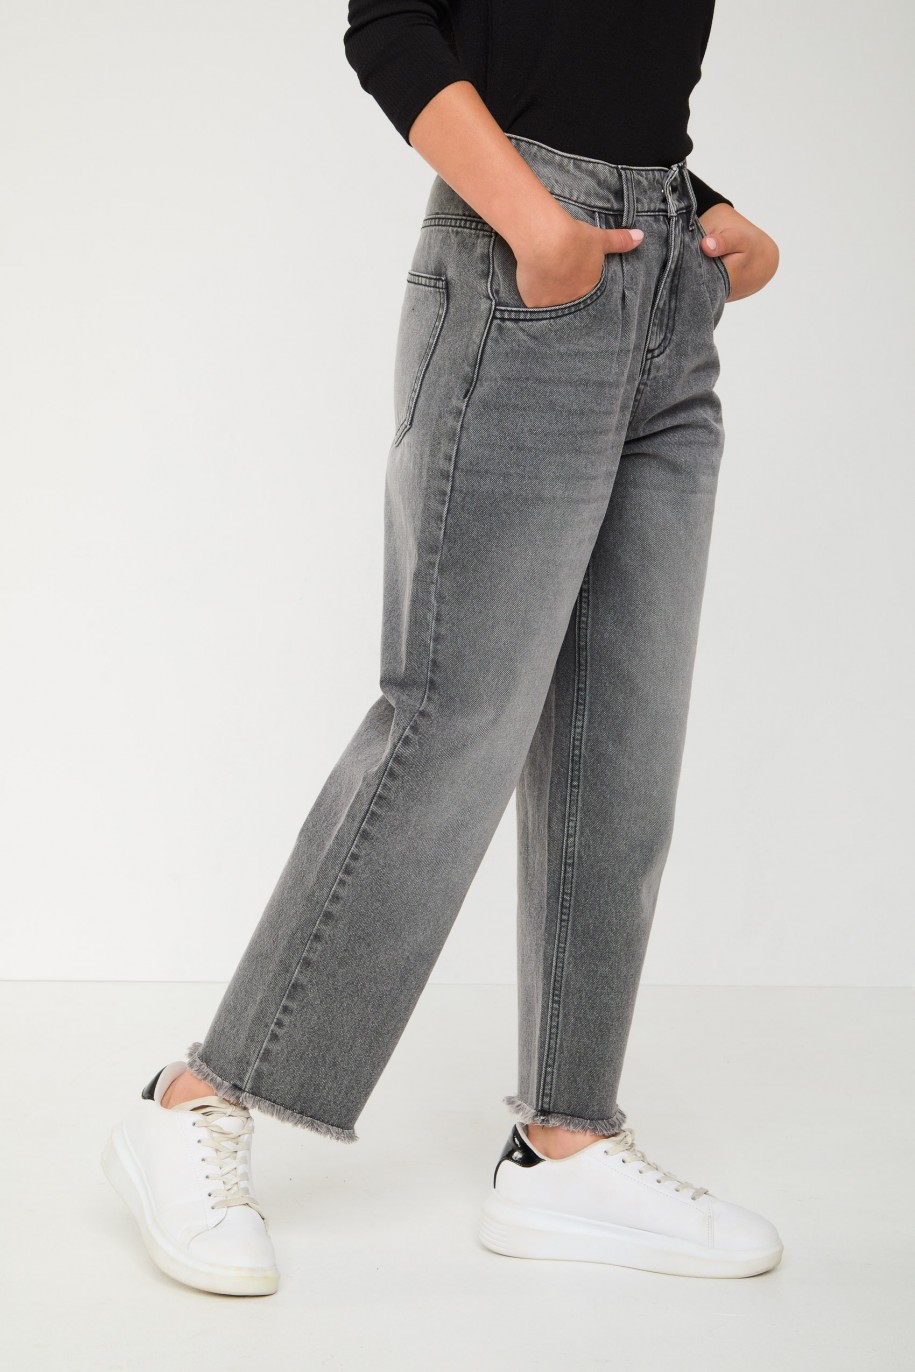 Szare jeansy typu SLOUCHY - 43838